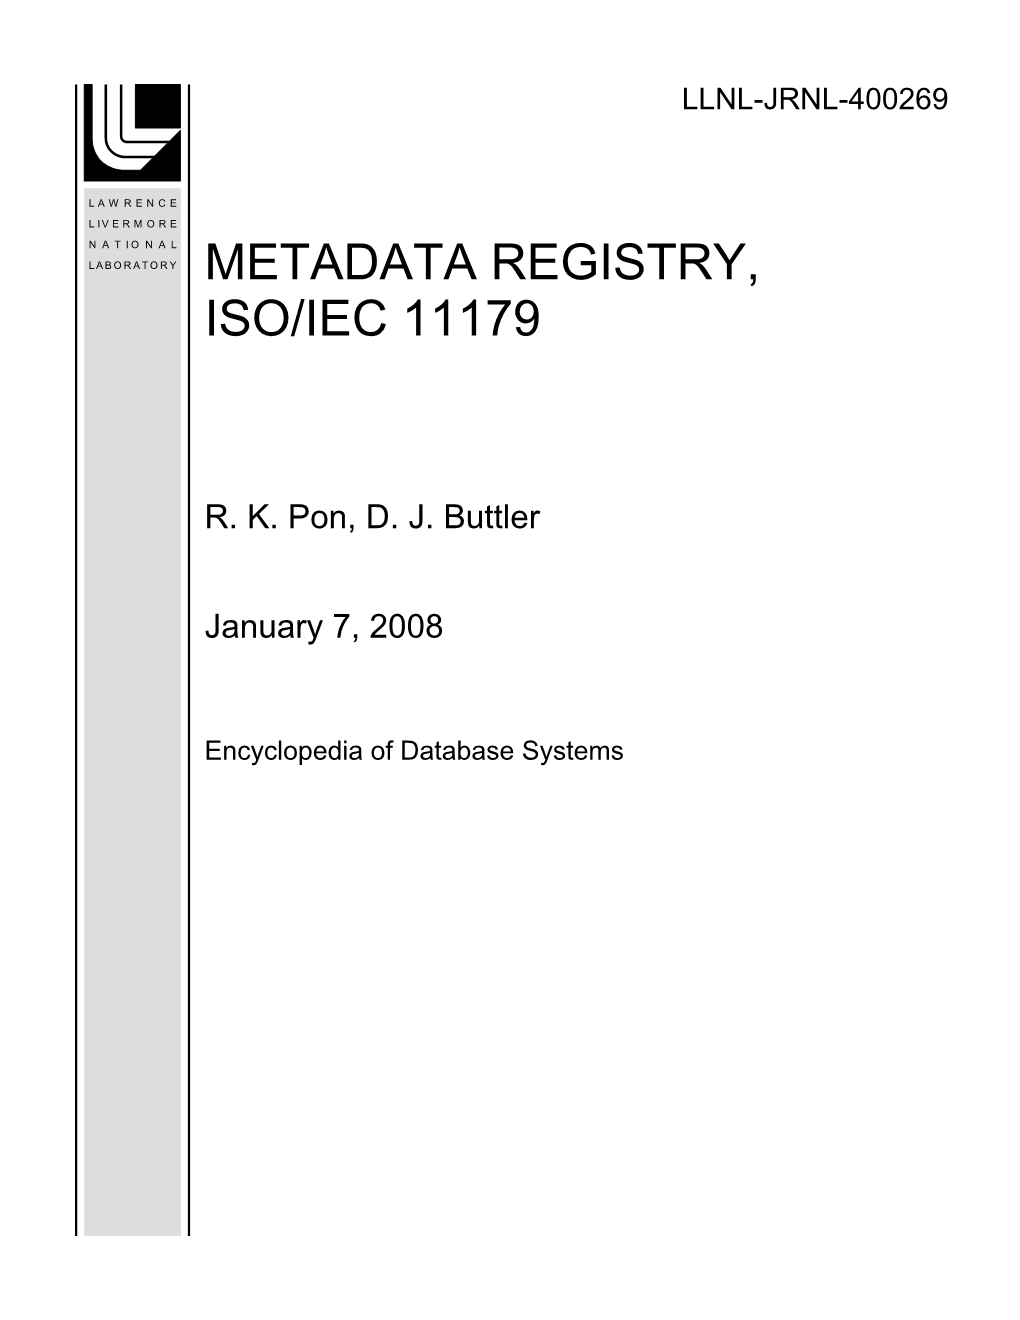 Metadata Registry, Iso/Iec 11179